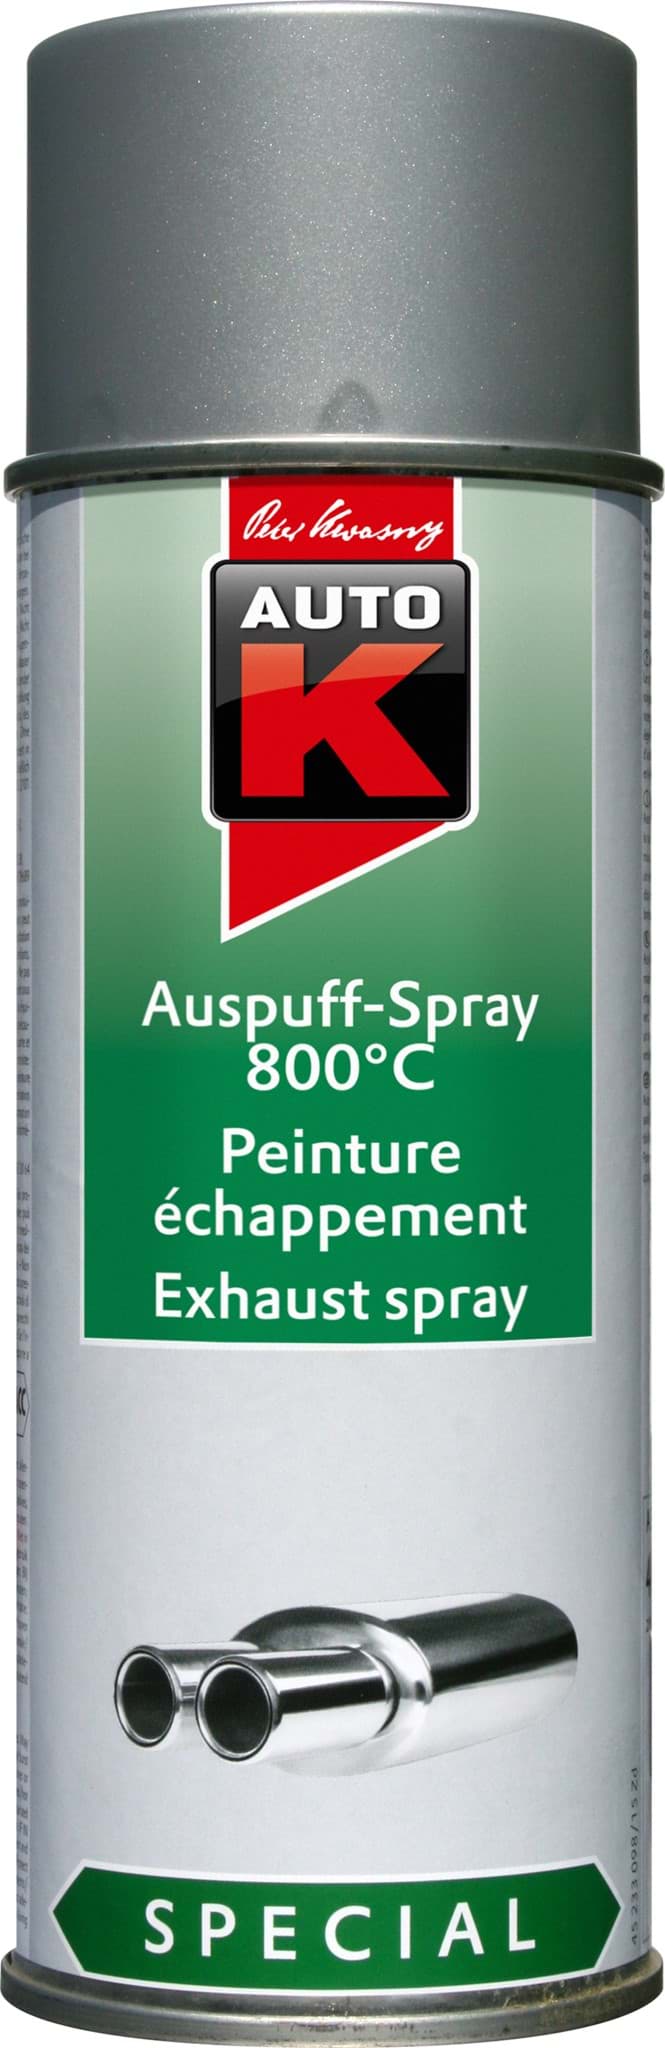 Изображение AutoK Auspuff Spray 800C° silber 400ml 233098 